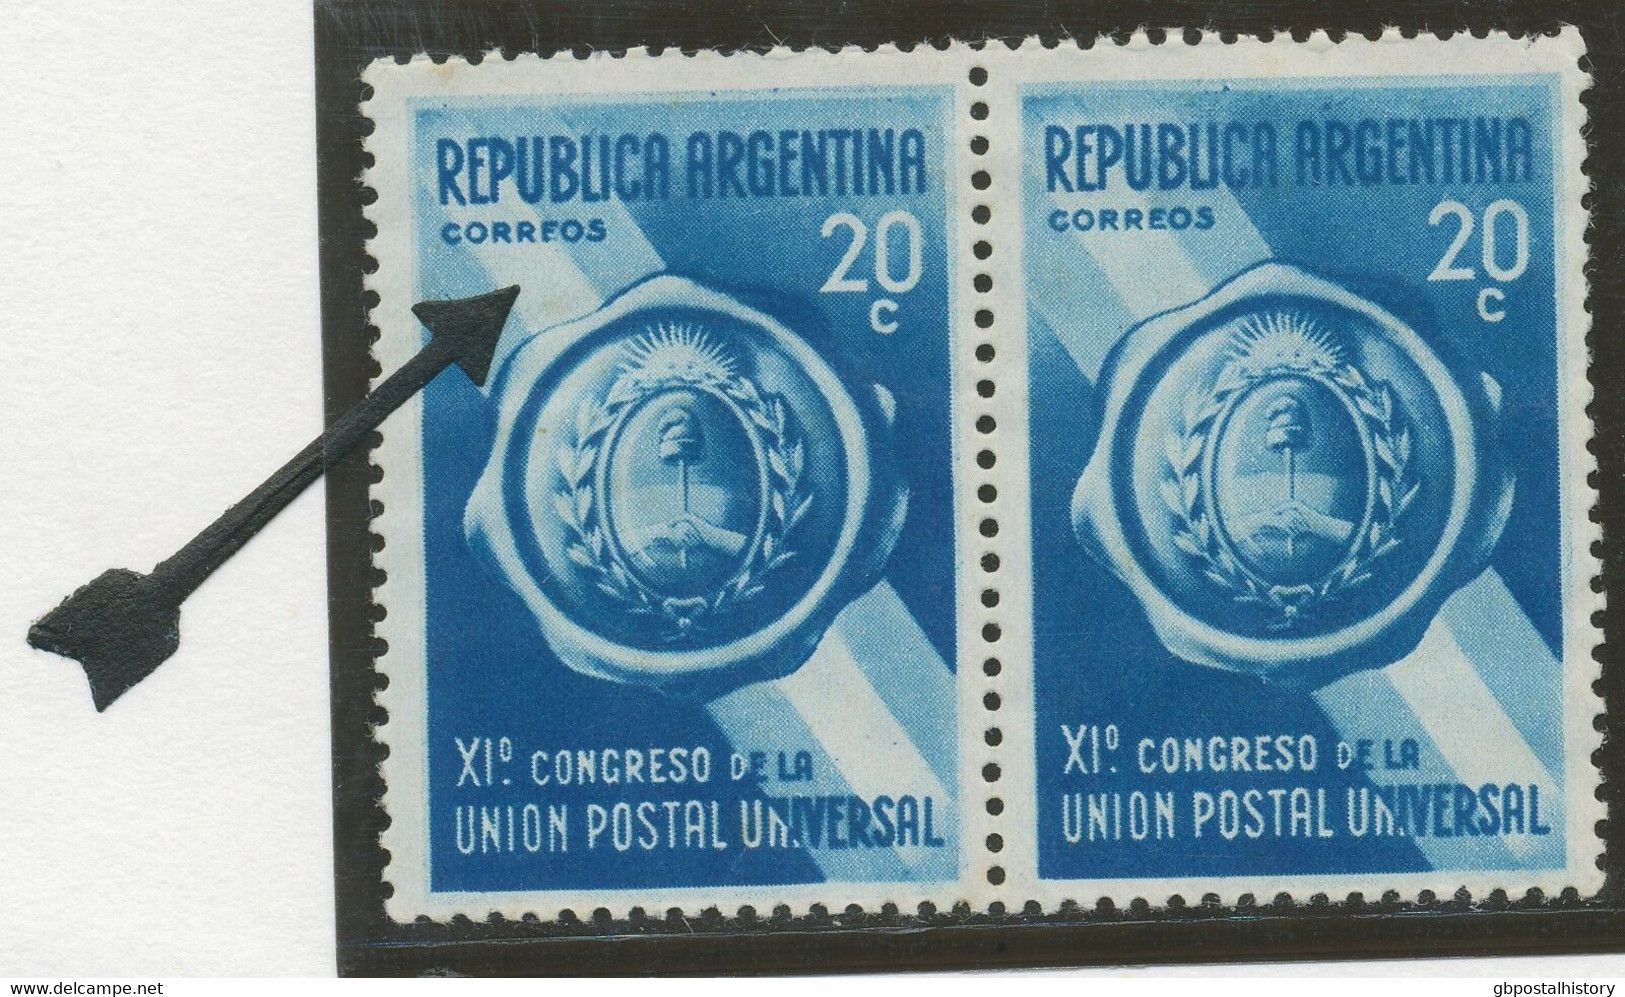 ARGENTINA 1939 11th UPU 20 C Blue M/M VARIETY "CORRFOS" Instead Of "CORREOS", R! - Nuevos